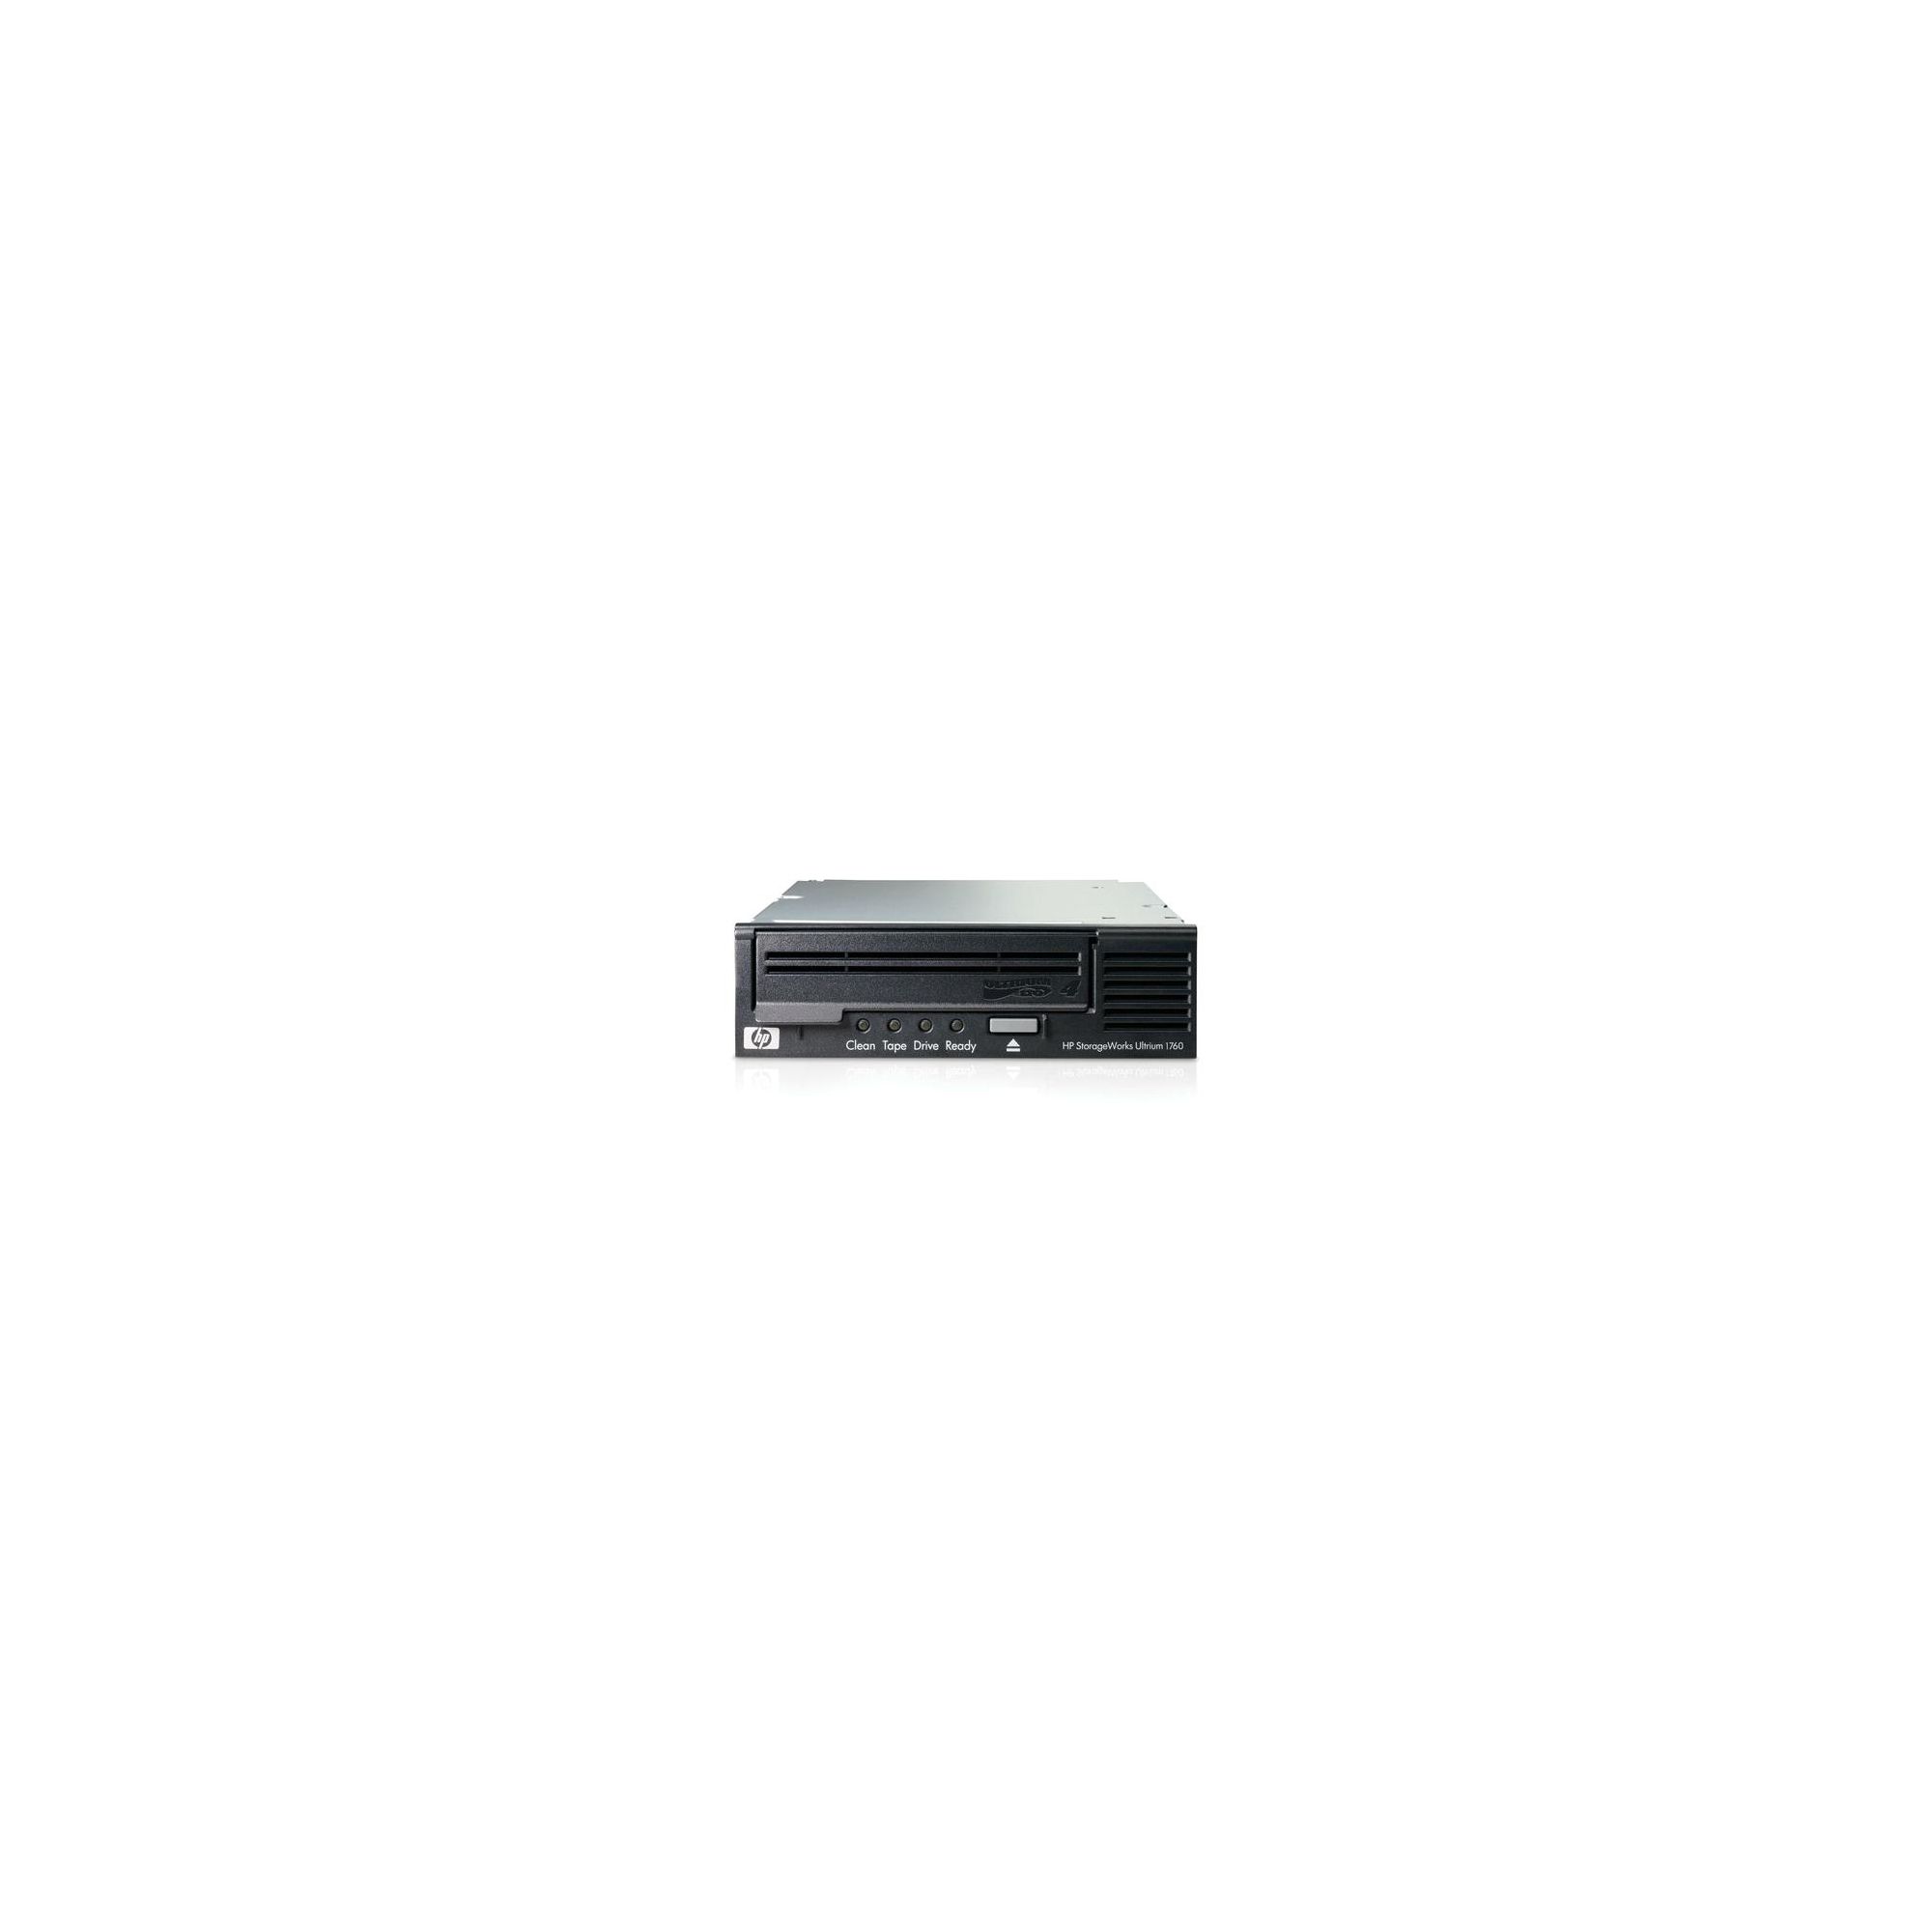 Hewlett-Packard StorageWorks Ultrium 1760 Tape Drive at Tesco Direct